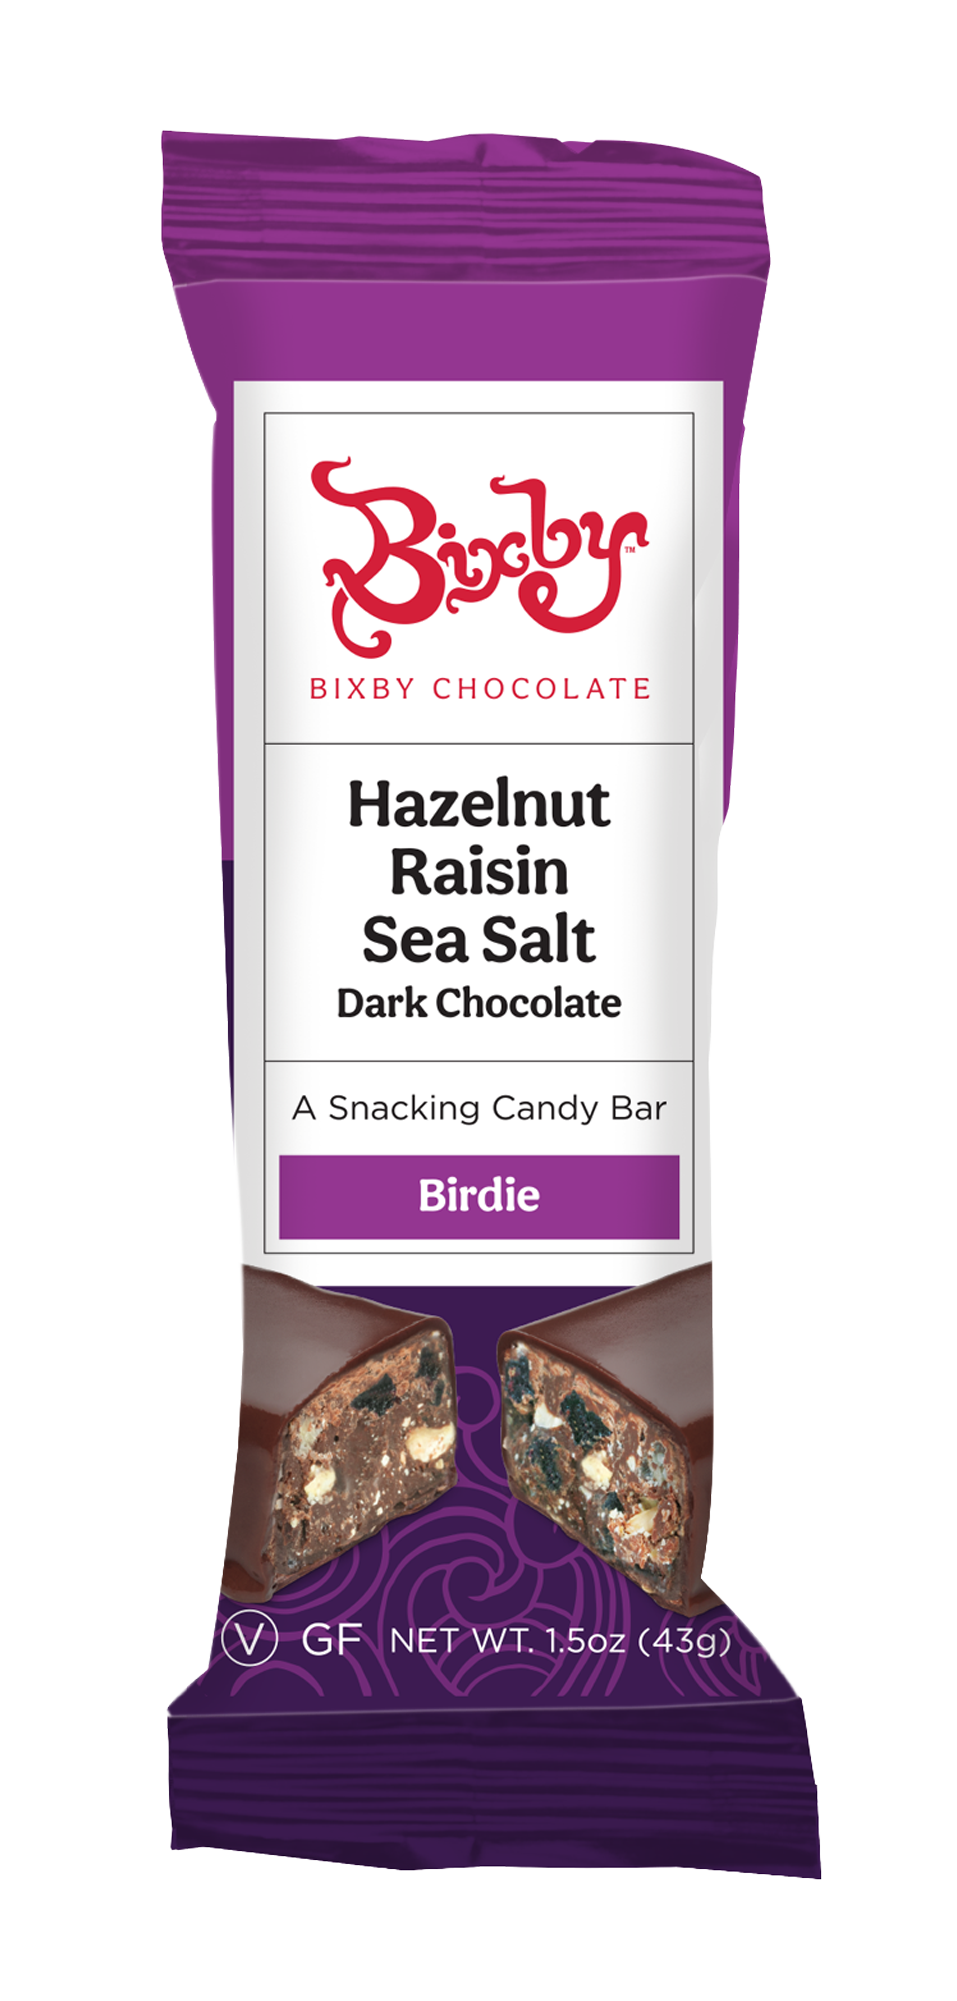 Birdie - Dark Chocolate + Hazelnuts + Raisins + Maine Sea Salt (Vegan)